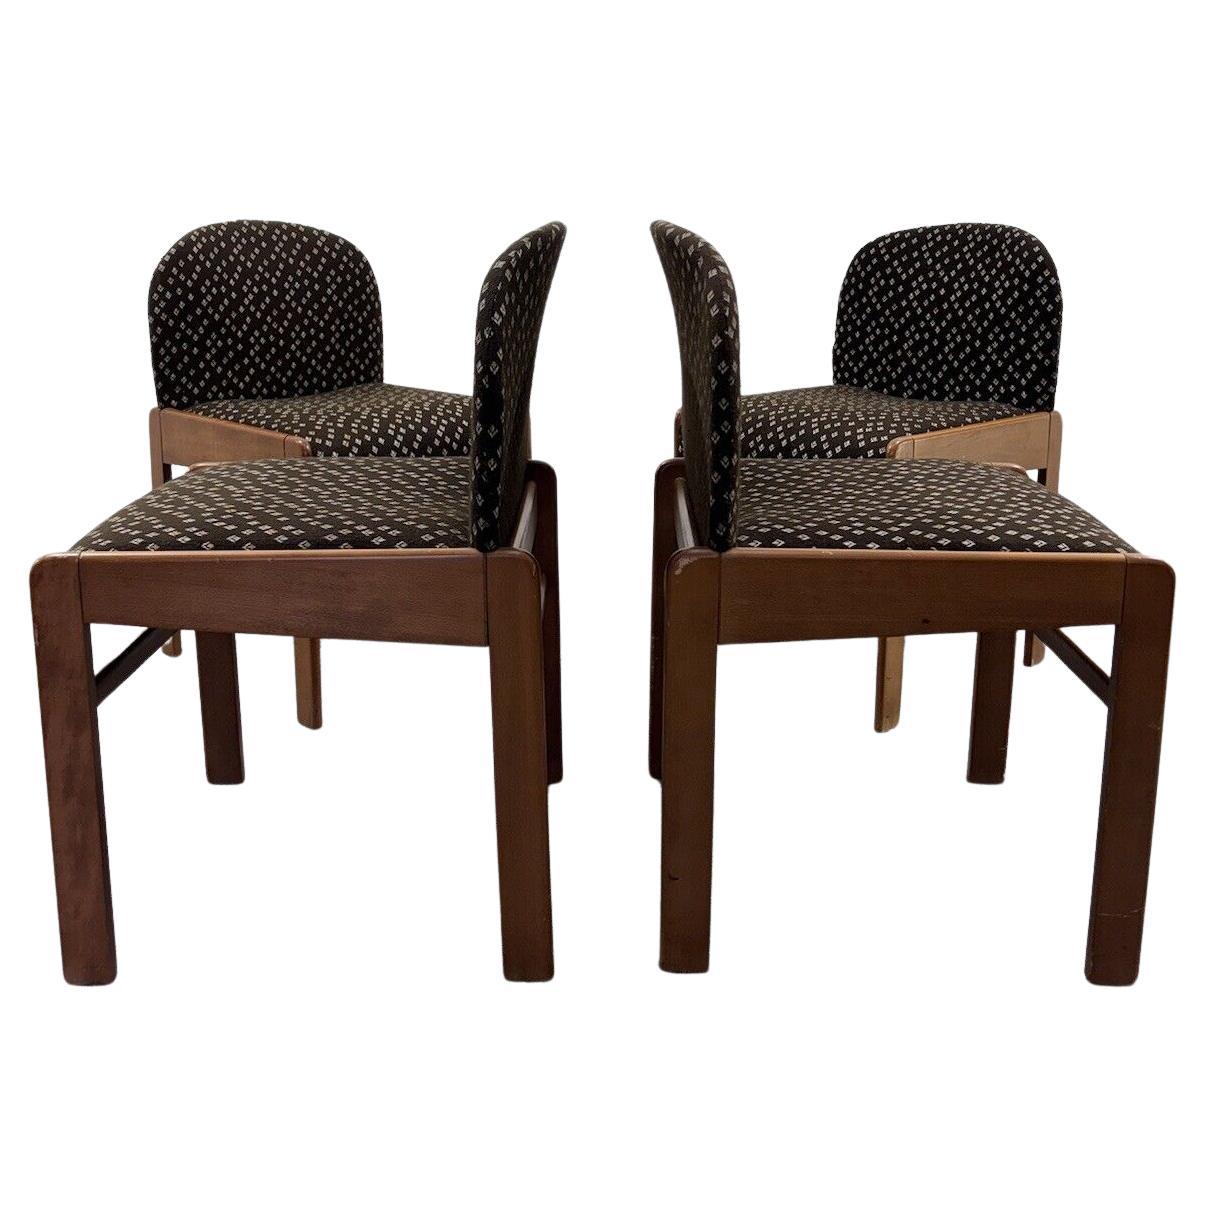 Set 4 Chairs Design Geometric 1960's Modernism